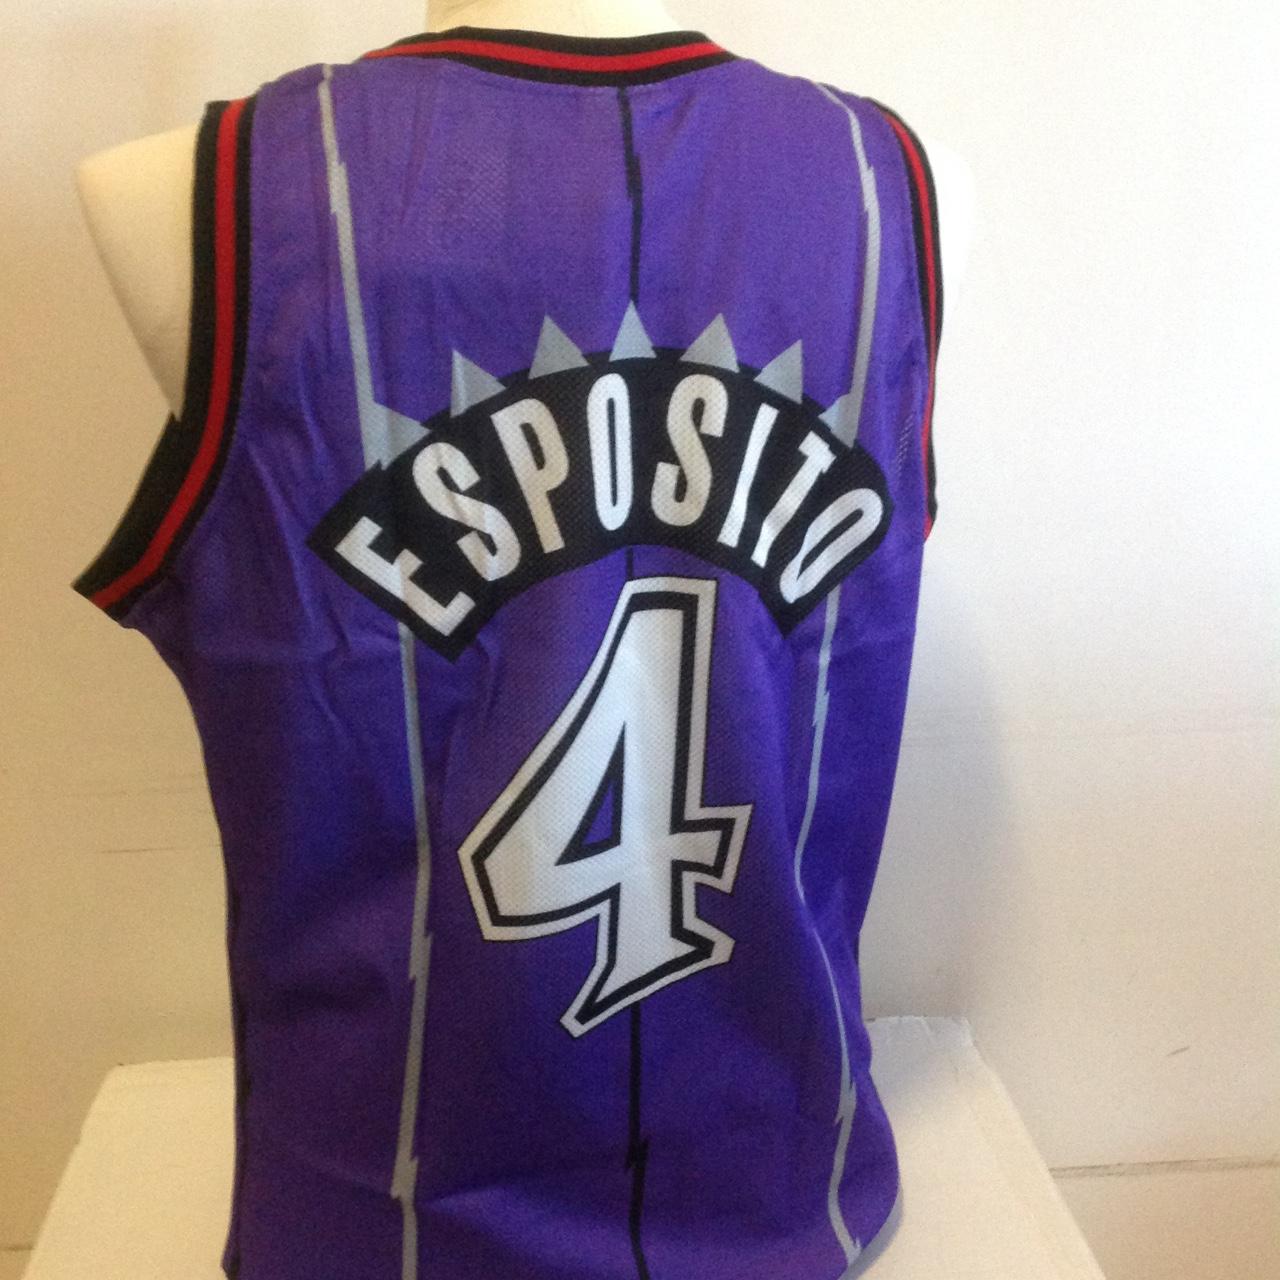 Lakers Women's Jersey Dress & Toronto Raptors - Depop